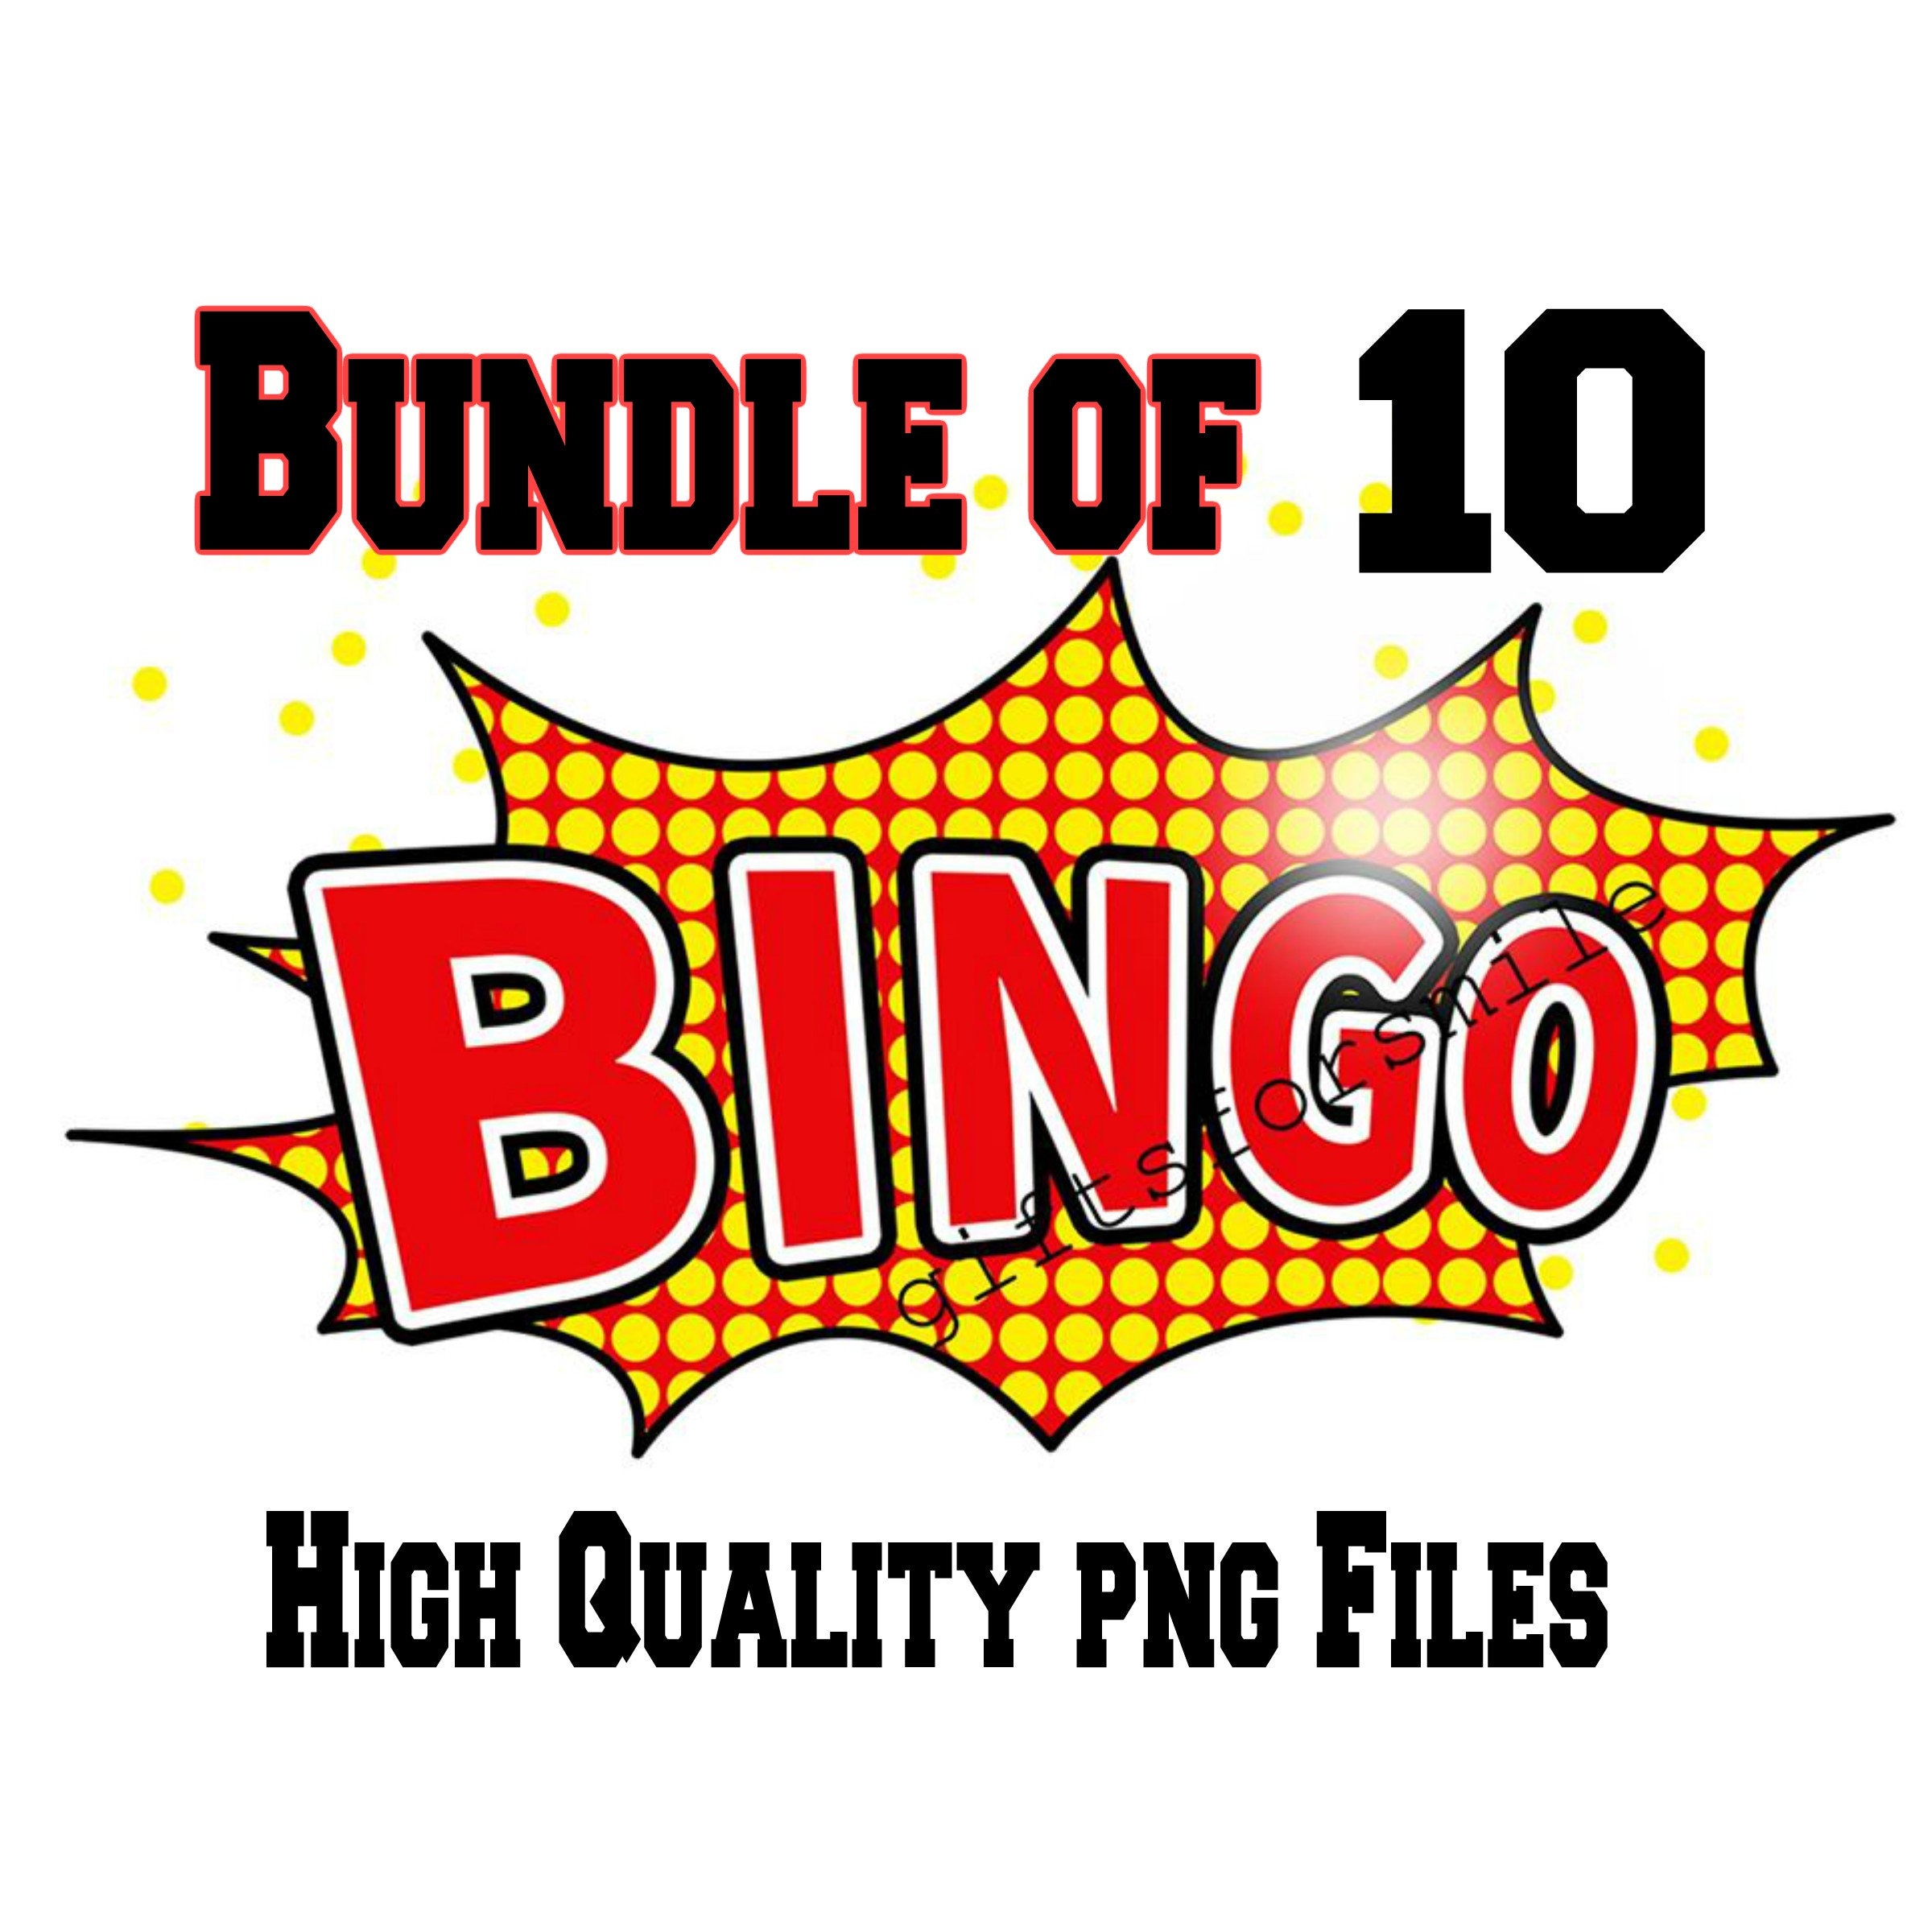 Bingo Dauber SVG, Bingo Dauber Vector, Silhouette, Cricut file, Clipart,  Cuttable Design, Png, Dxf & Eps Designs.